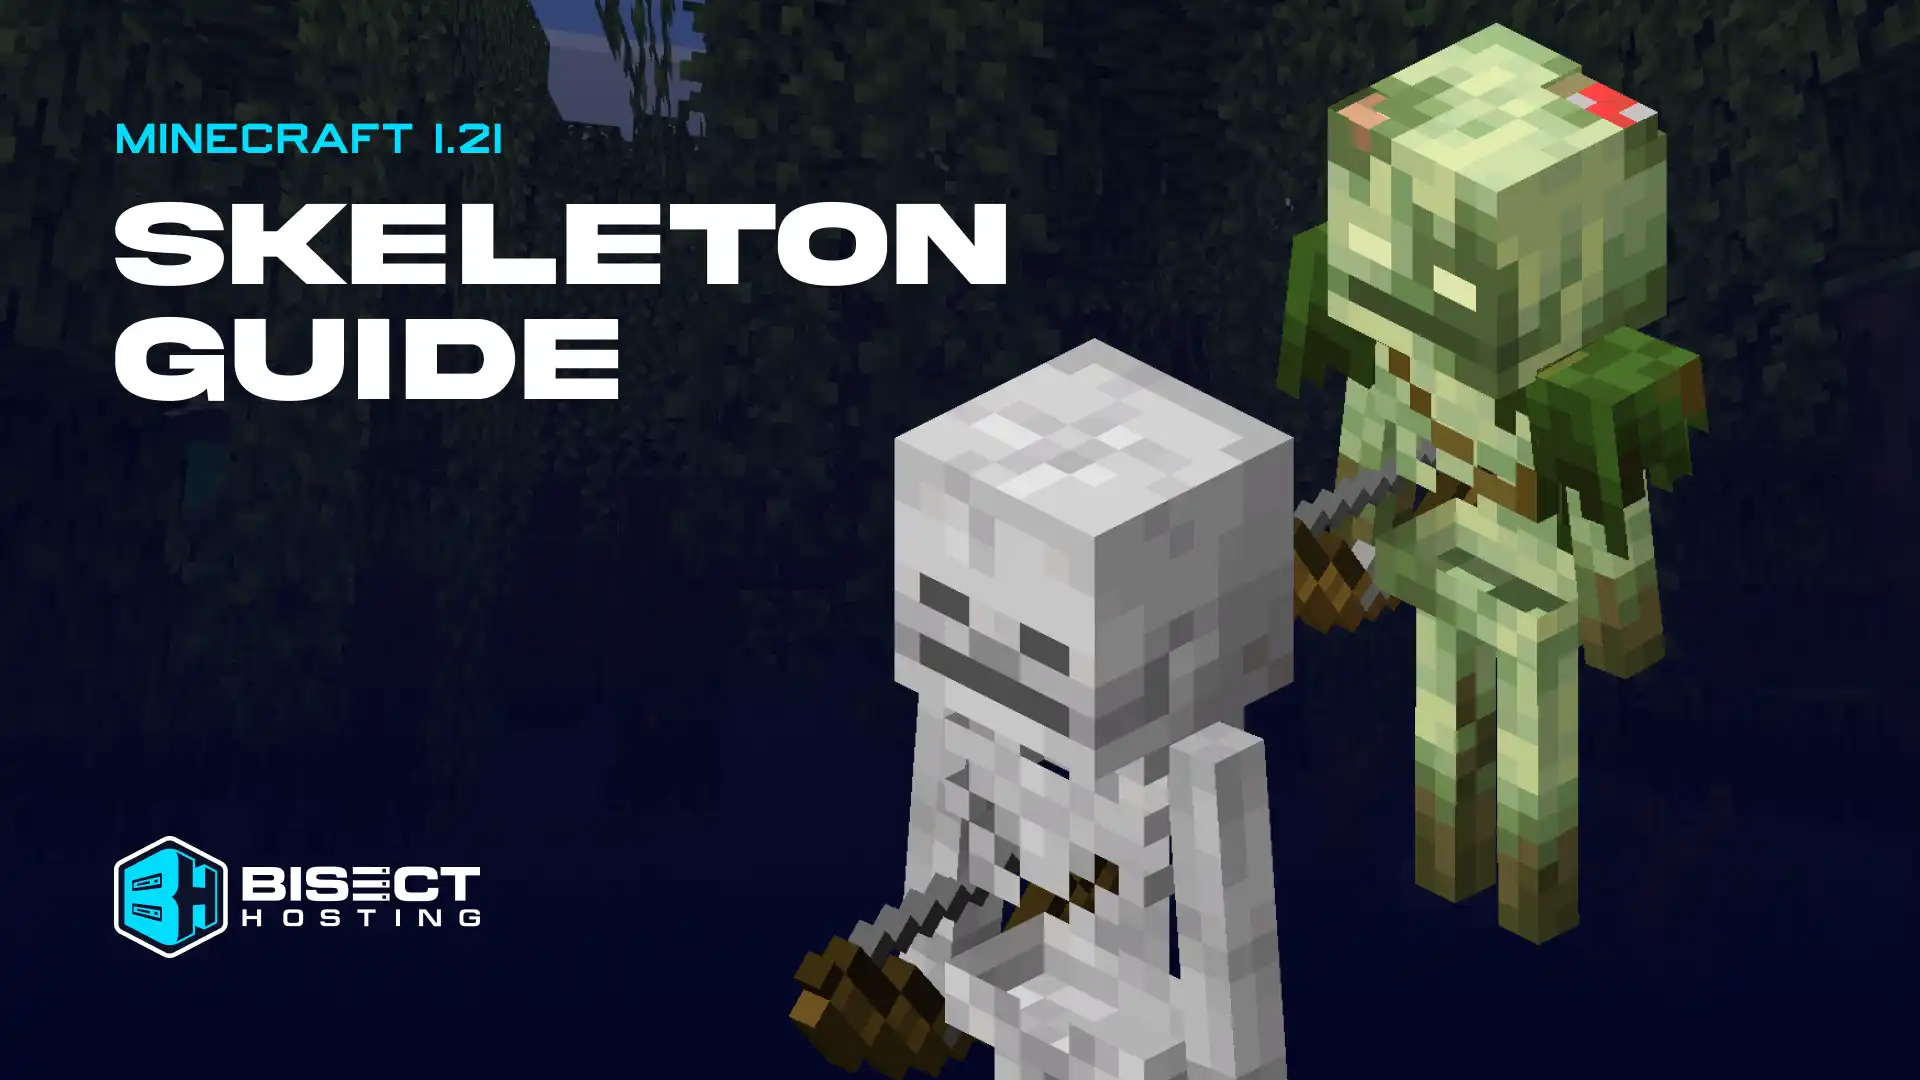 Minecraft 1.21 Skeleton Guide: All Skeleton Types, Drops, & More